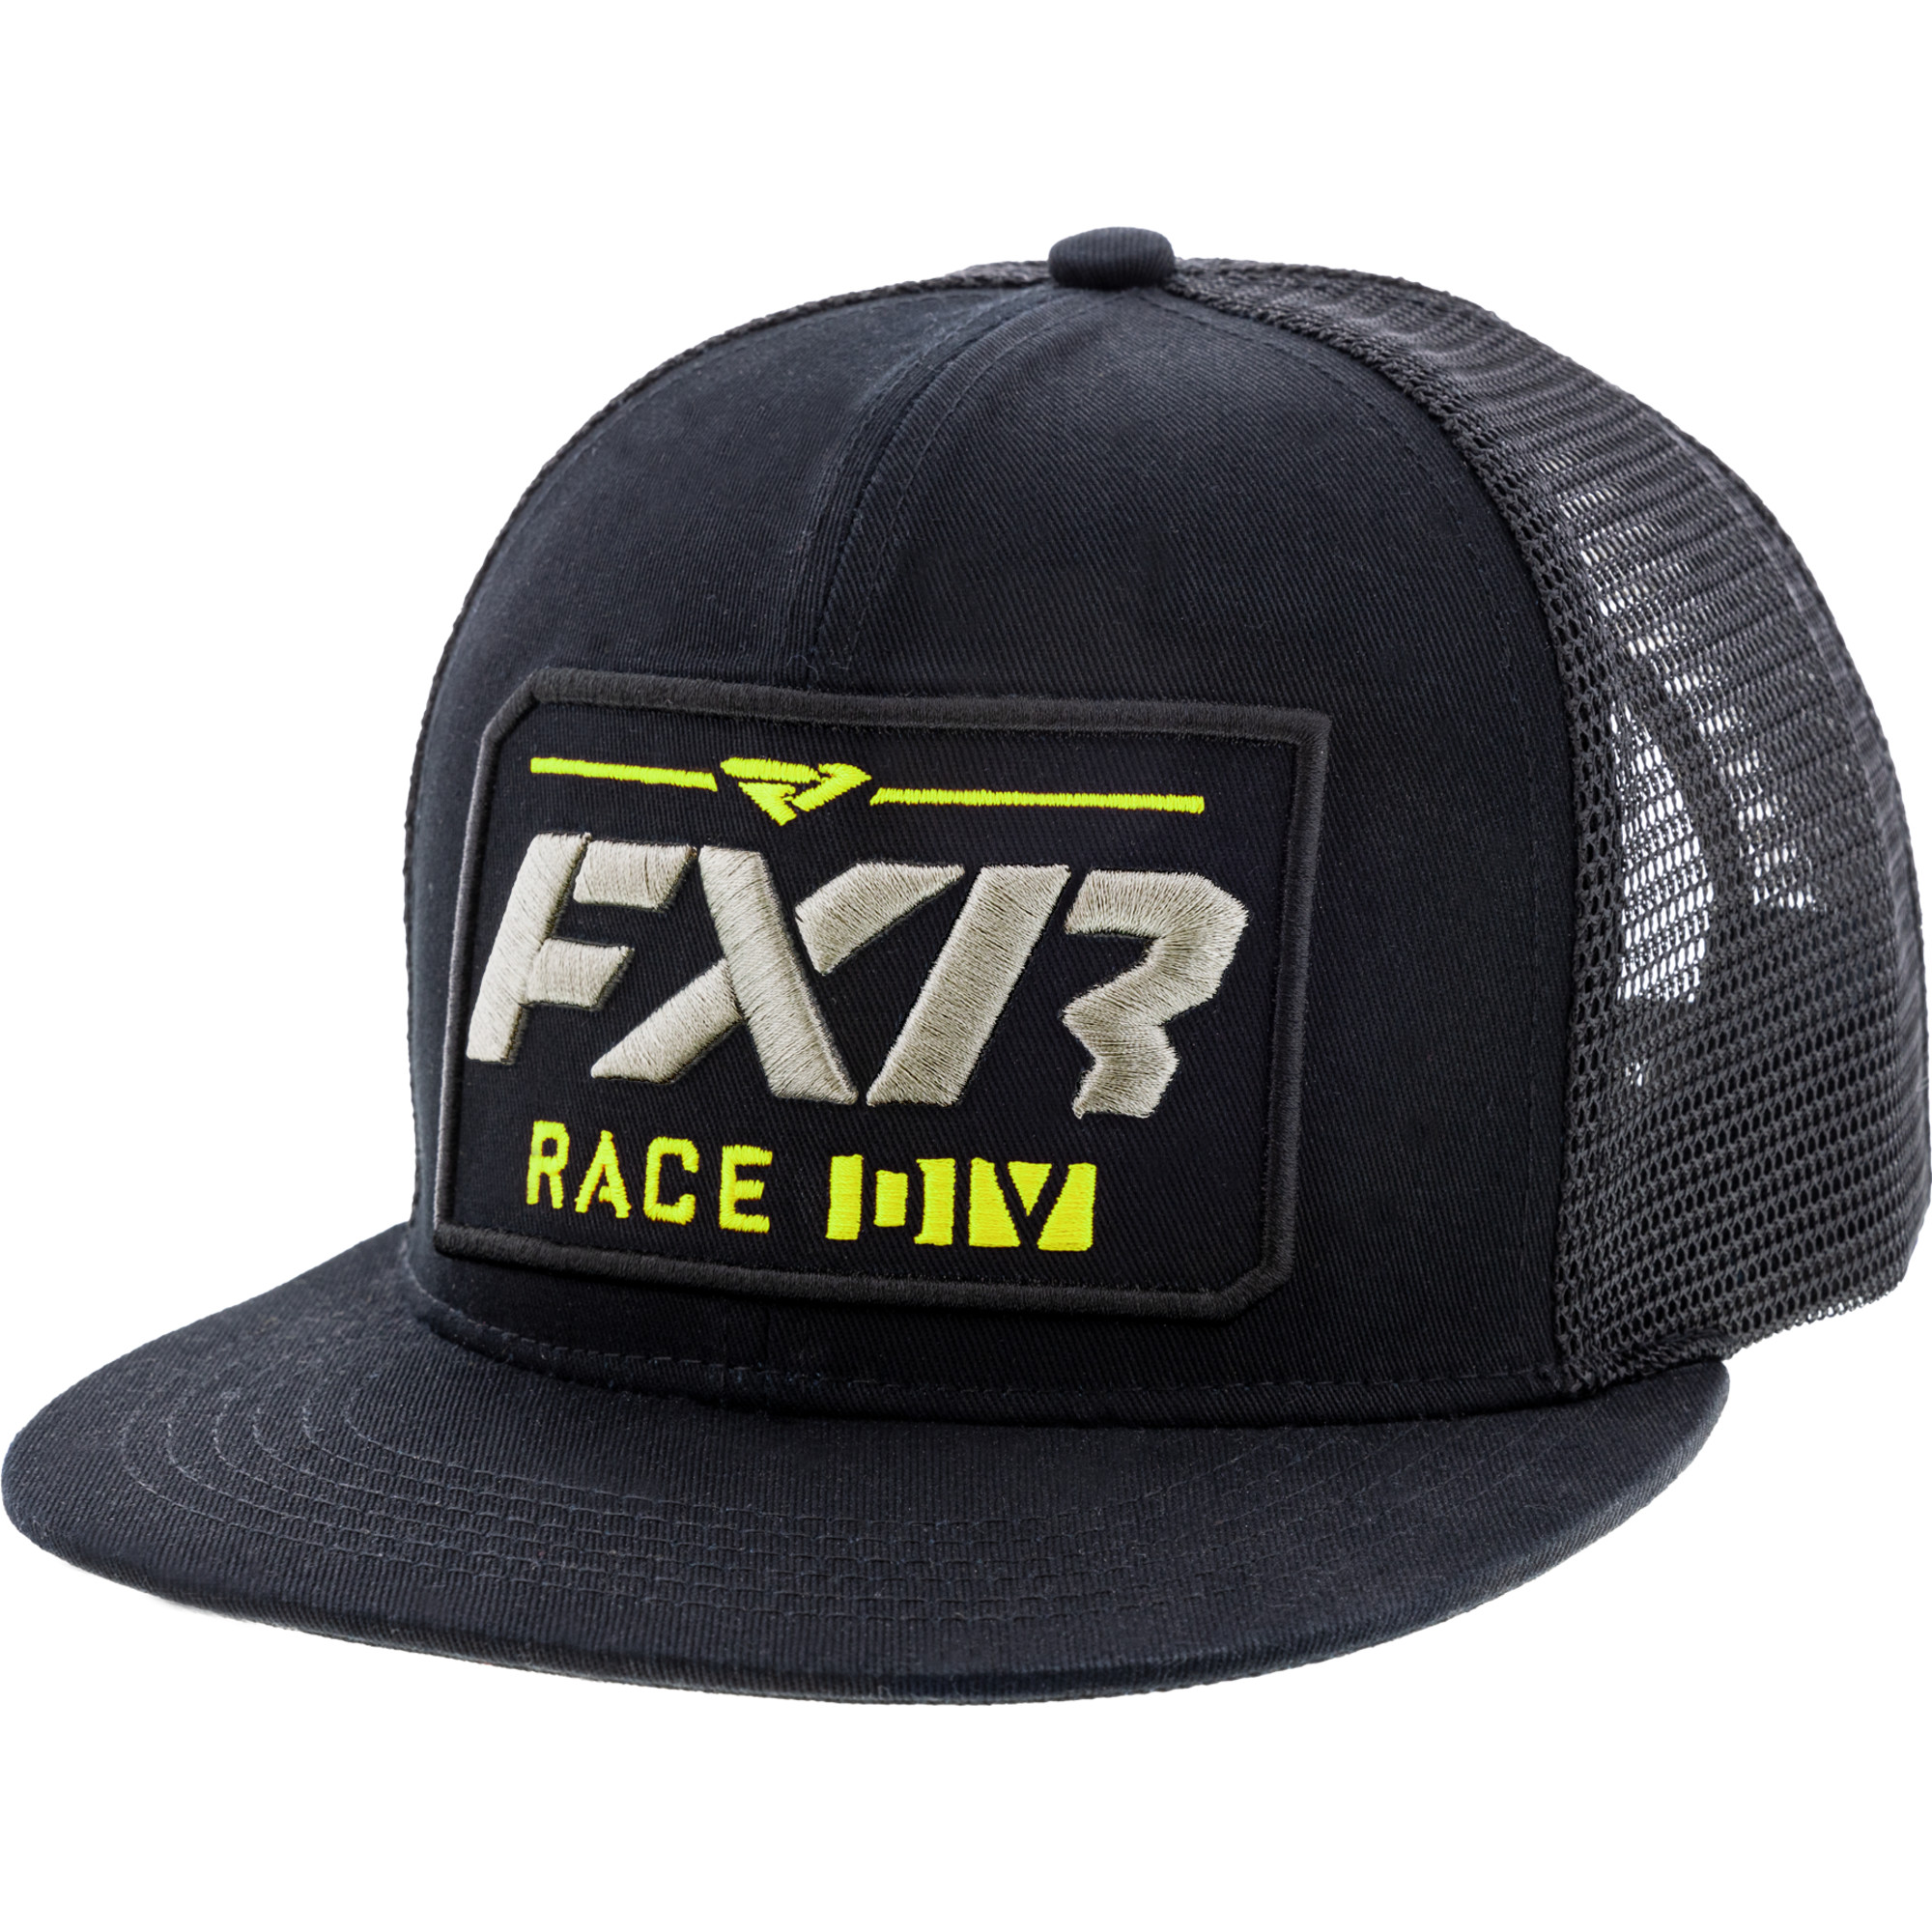 fxr racing hats kids for race div